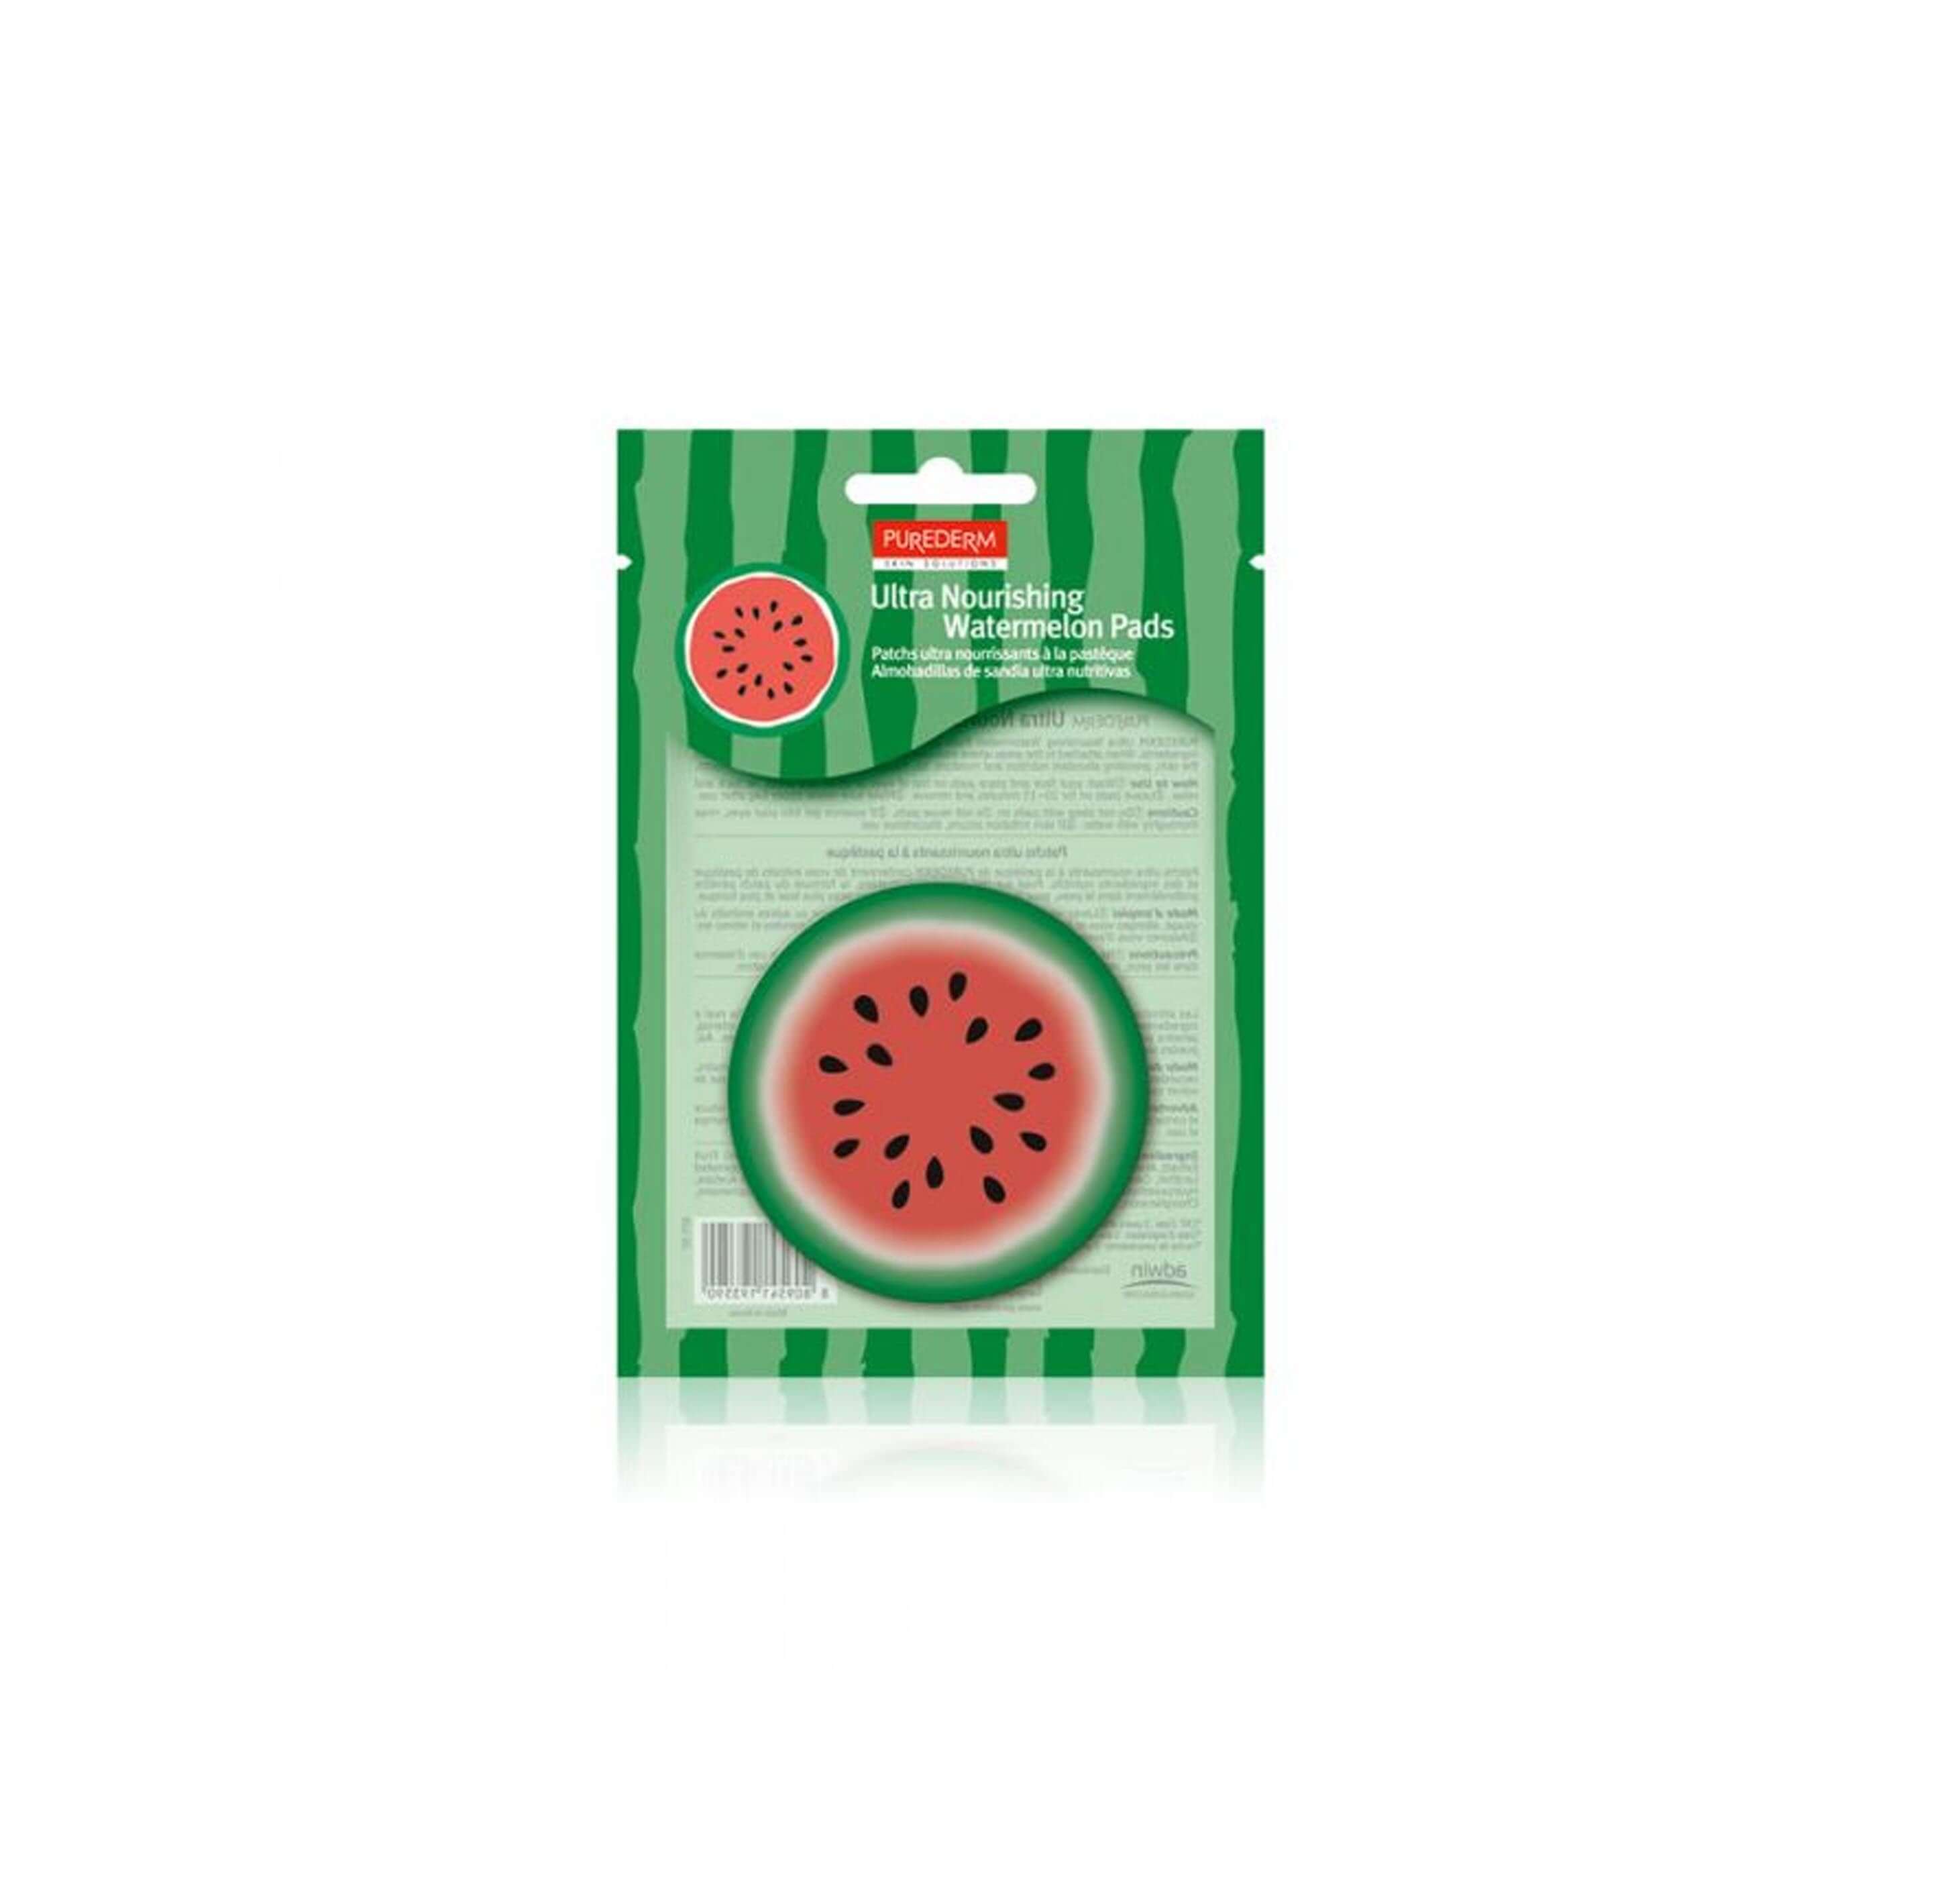 Purederm Ultra Nourishing Watermelon Pads